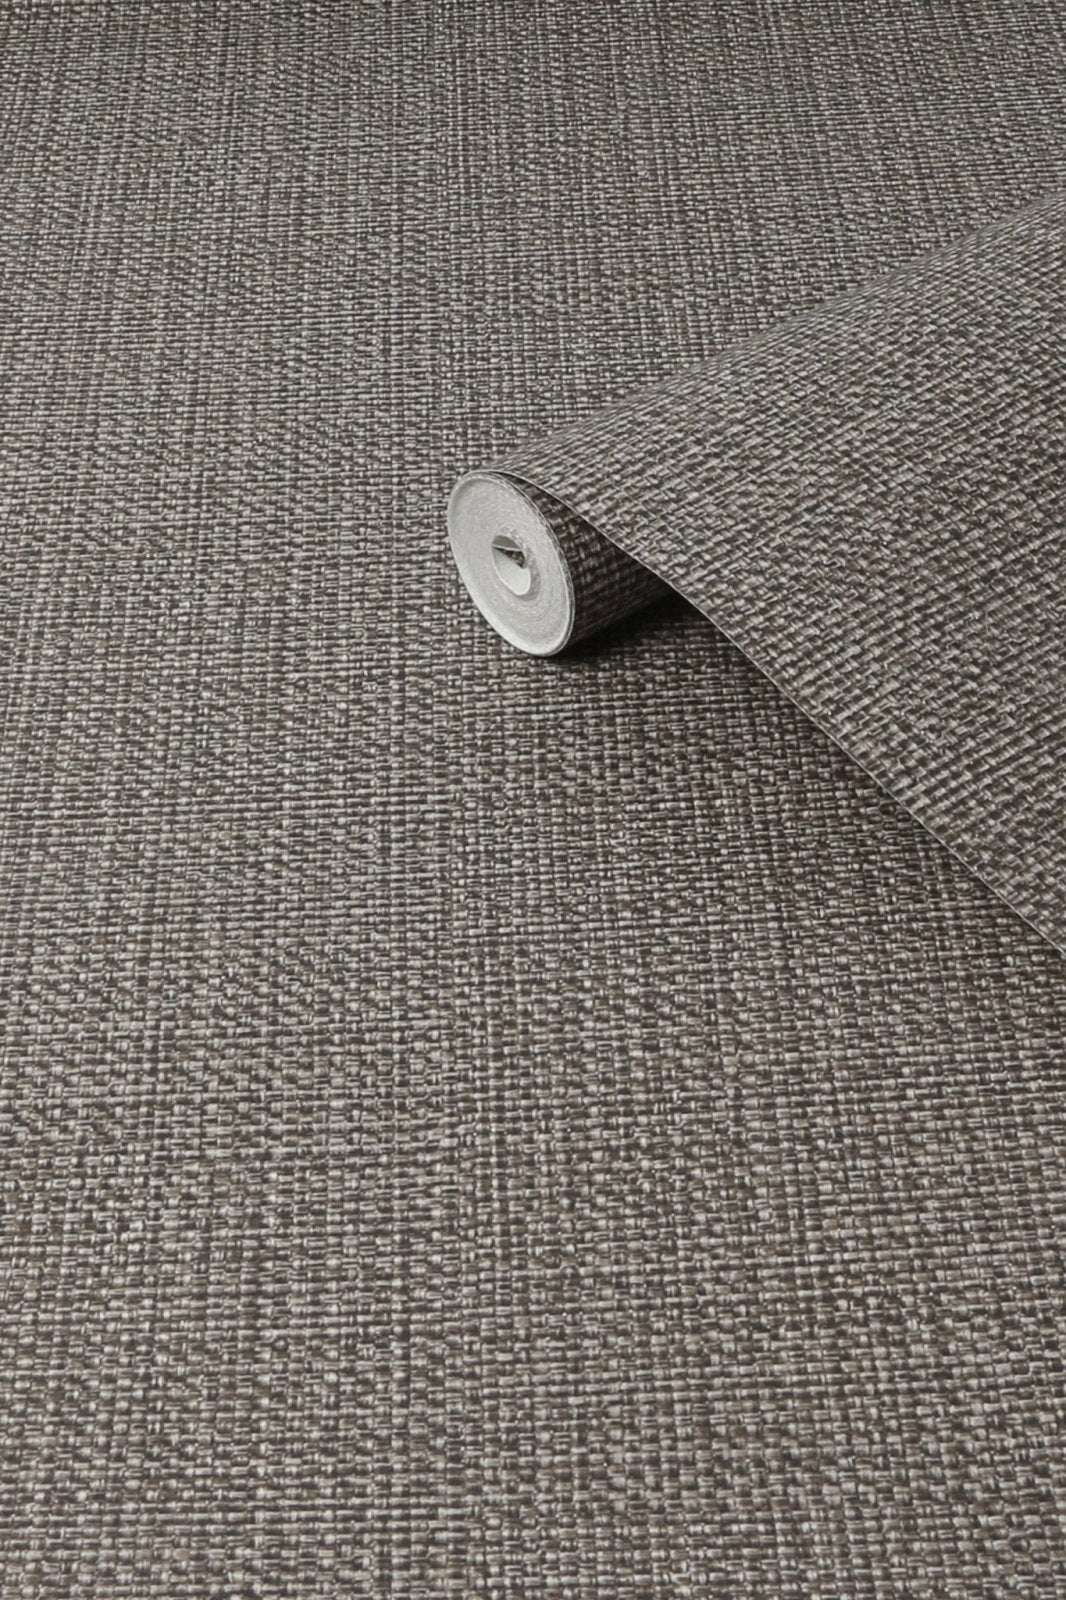 118319-Graham & Brown-Next - Linen Weave Coco Wallpaper-Decor Warehouse